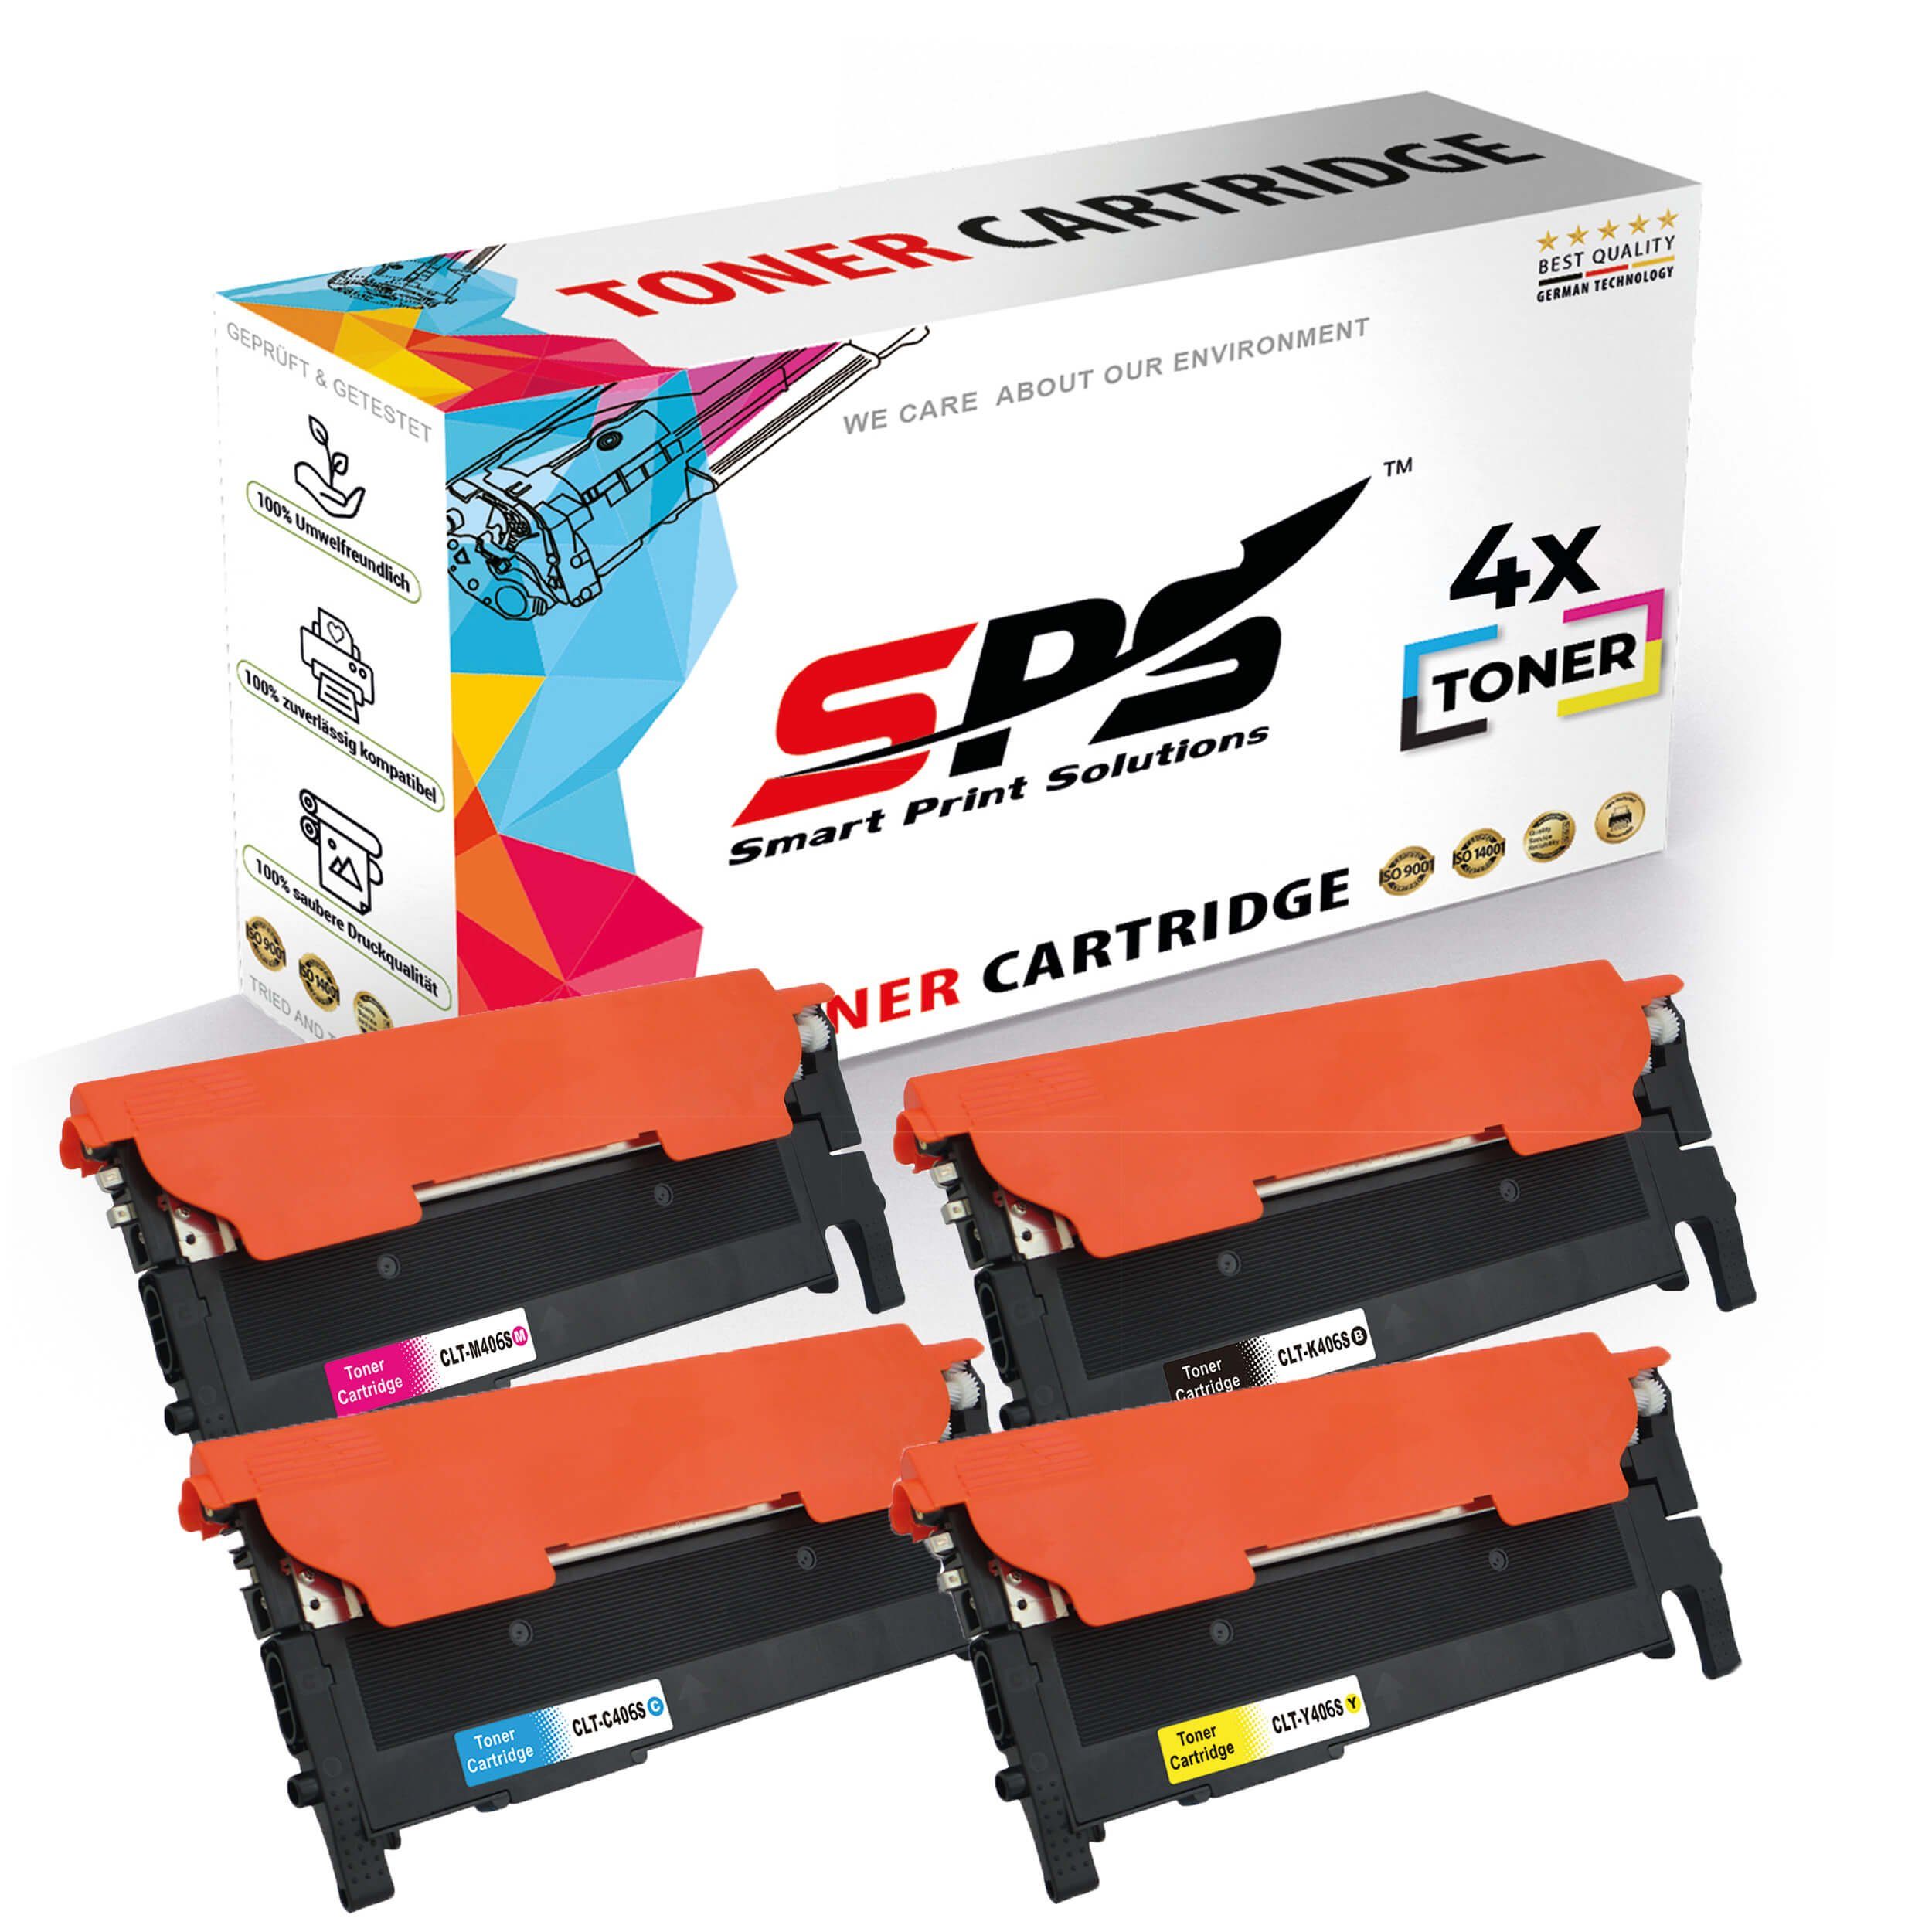 SPS Tonerkartusche 4x Multipack Set Kompatibel für Samsung CLP 365 W, (4er Pack, 4x Toner)